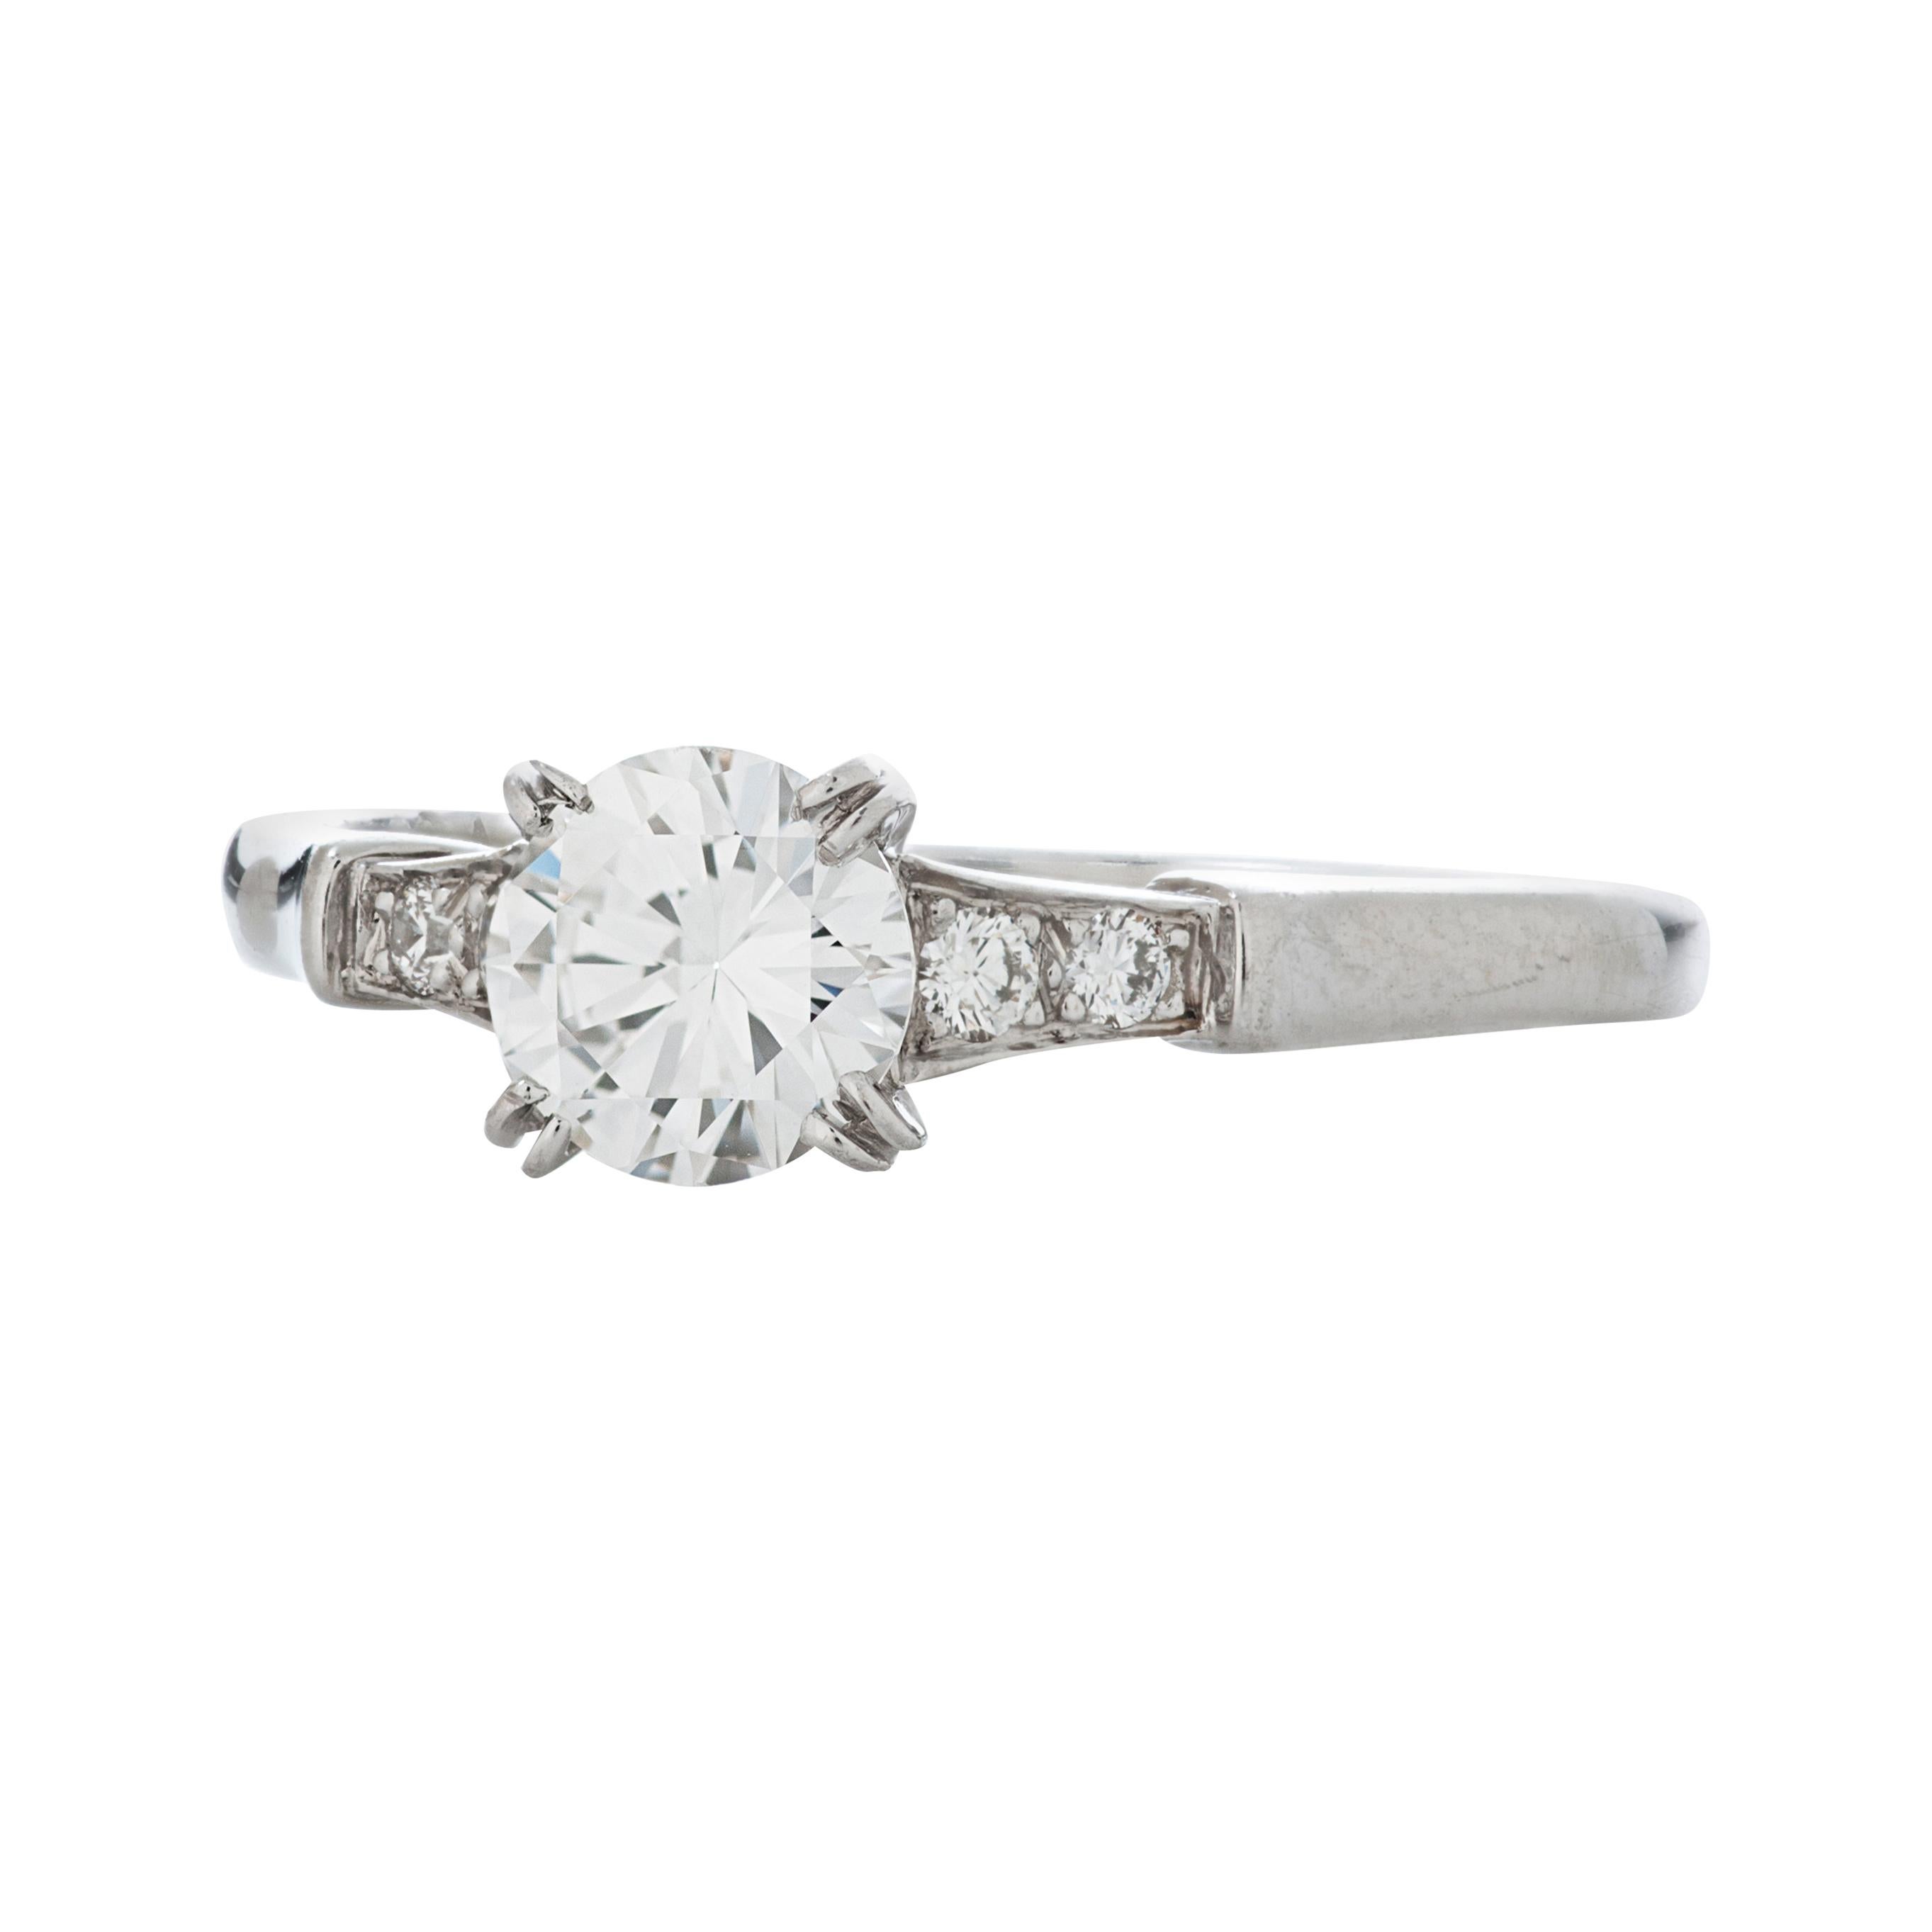 J.E. Caldwell & Co. 0.57ct E/VVS2 GIA Round Diamond Engagement Ring in Platinum